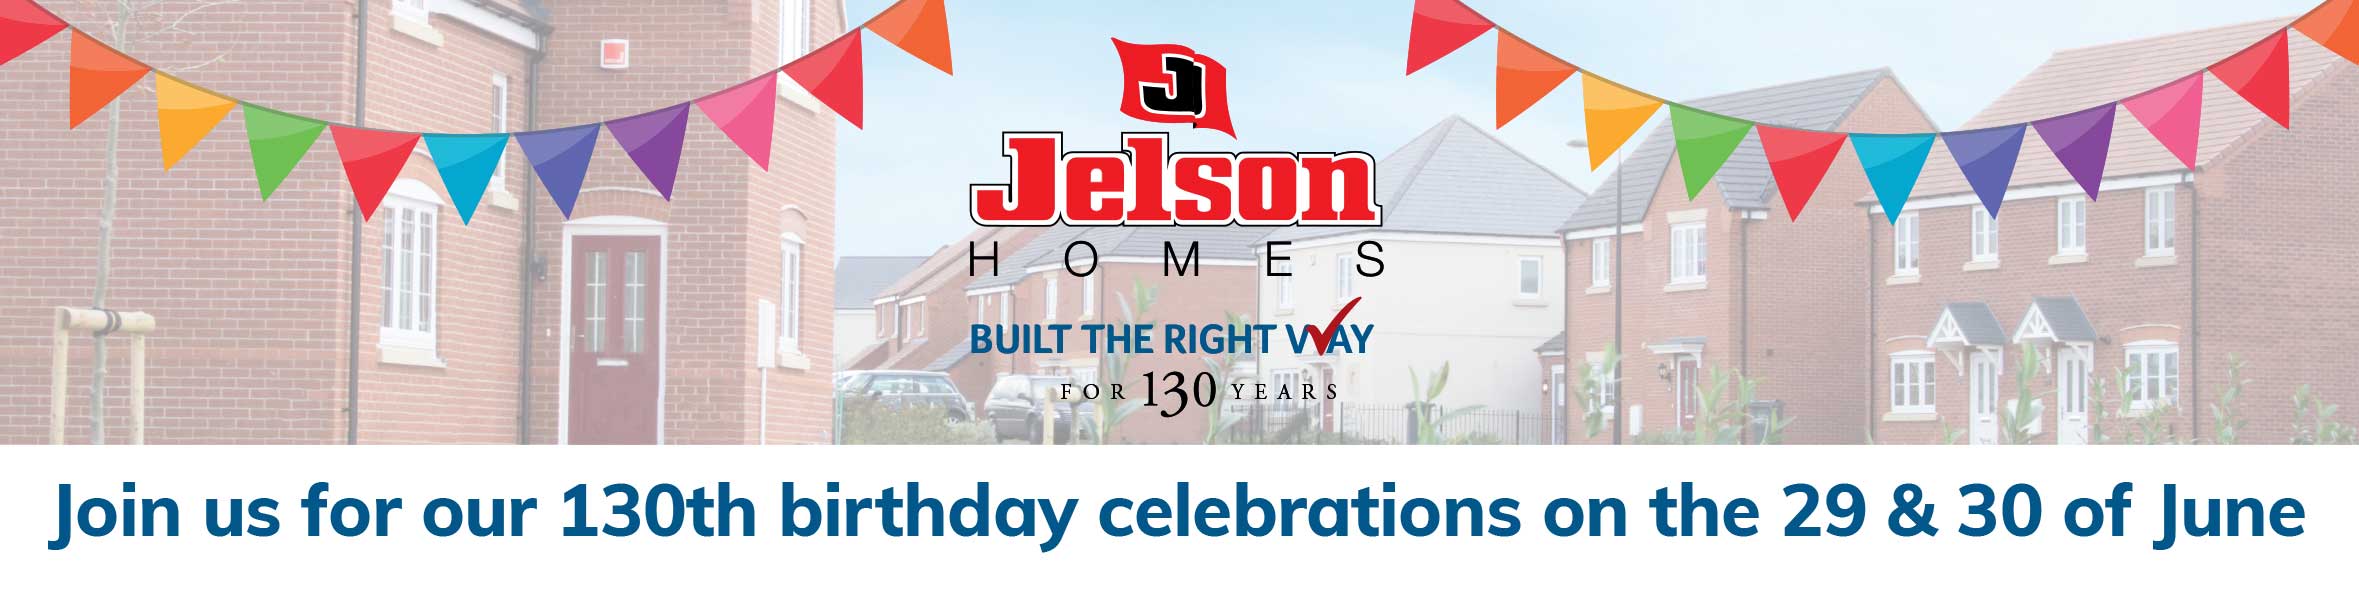 Jelson Homes 130th birthday celebrations